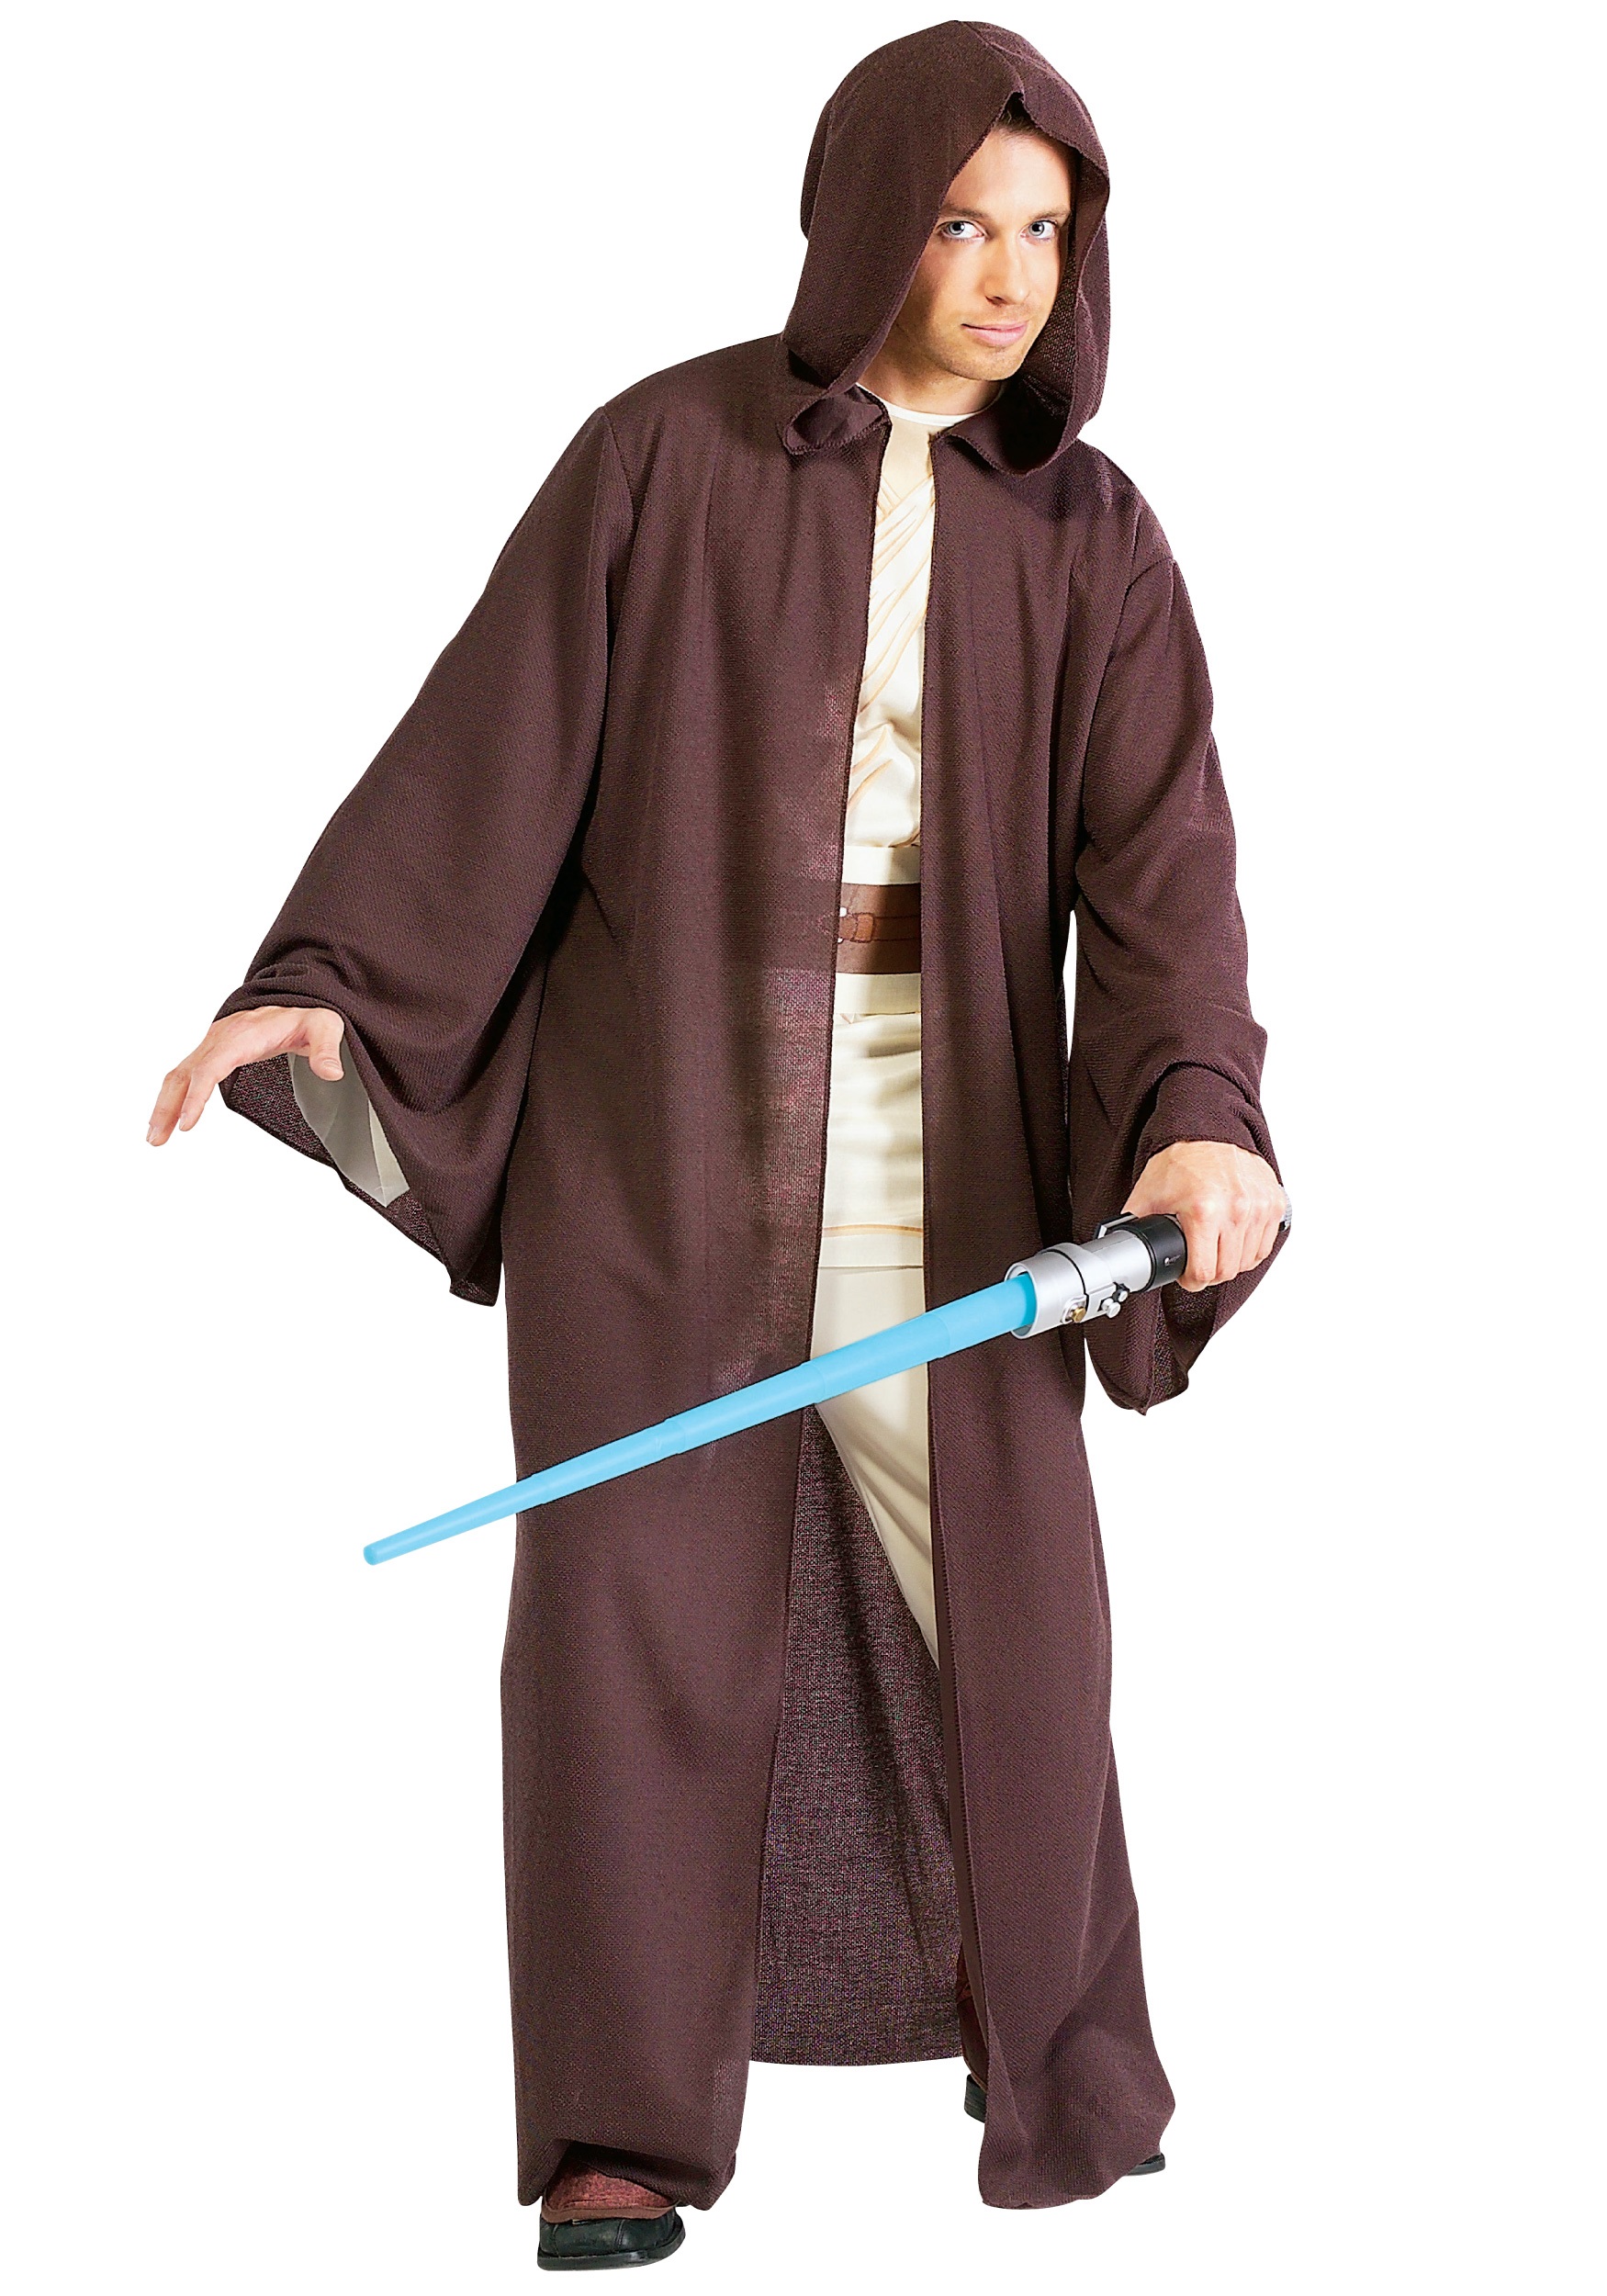 Adult Jedi Robe 96